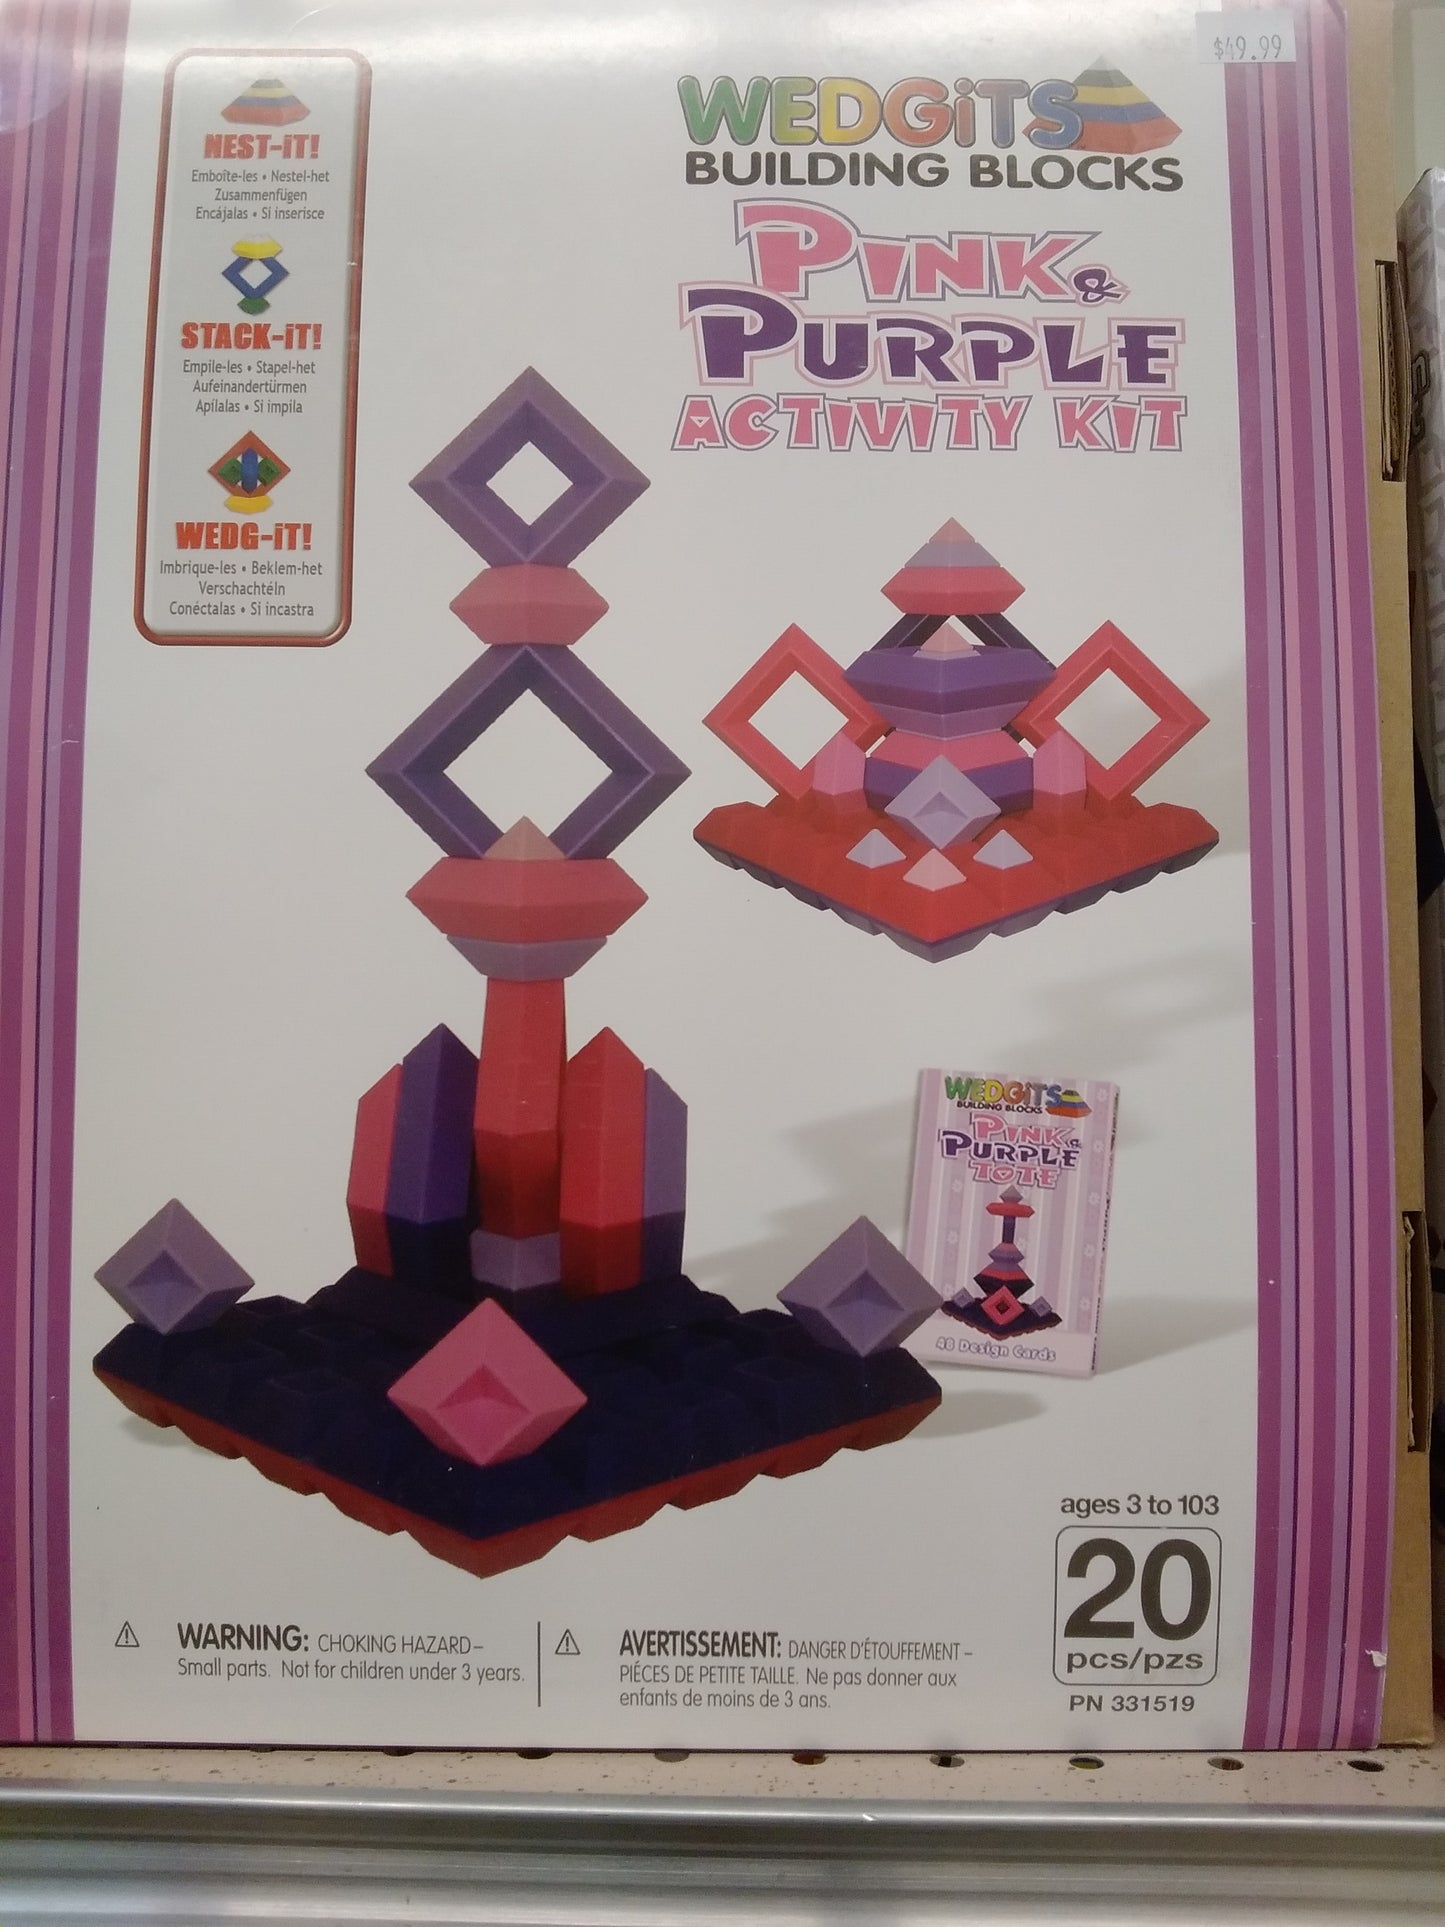 Wedgits Pink & Purple Activity Kit